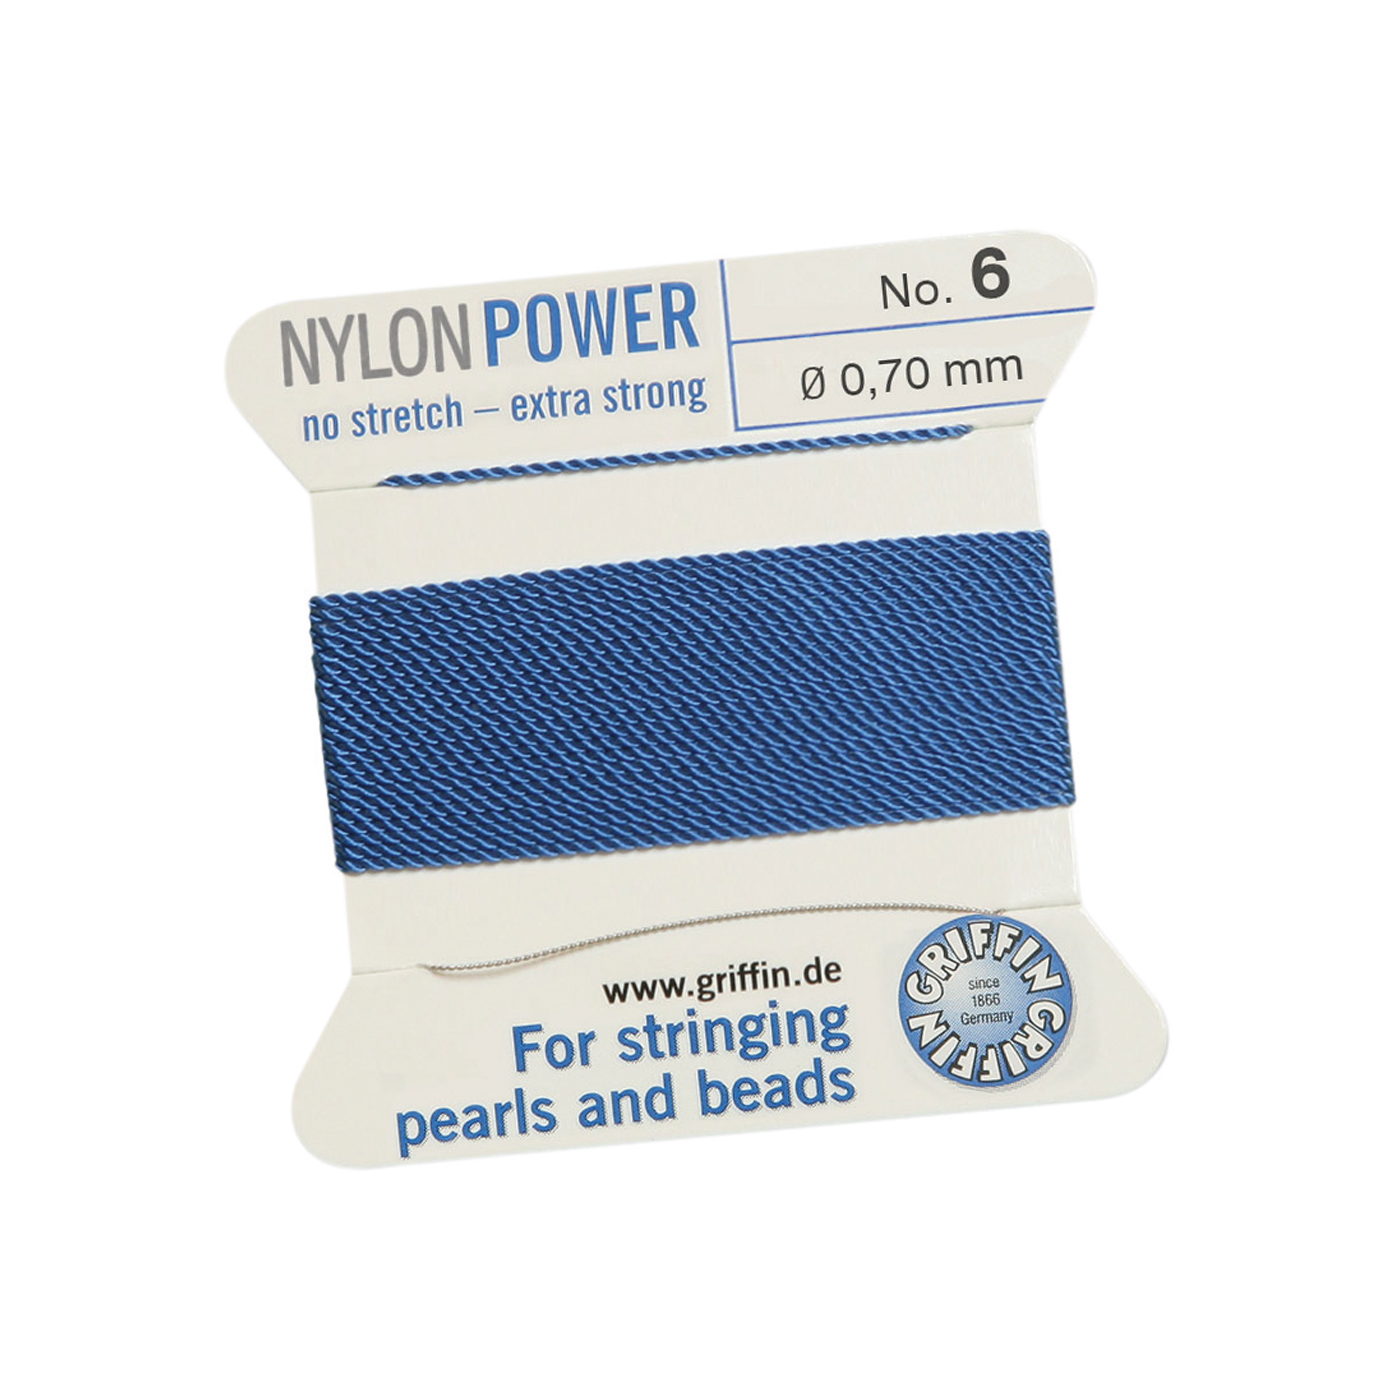 Bead Cord NylonPower, Blue, No. 6 - 2 m